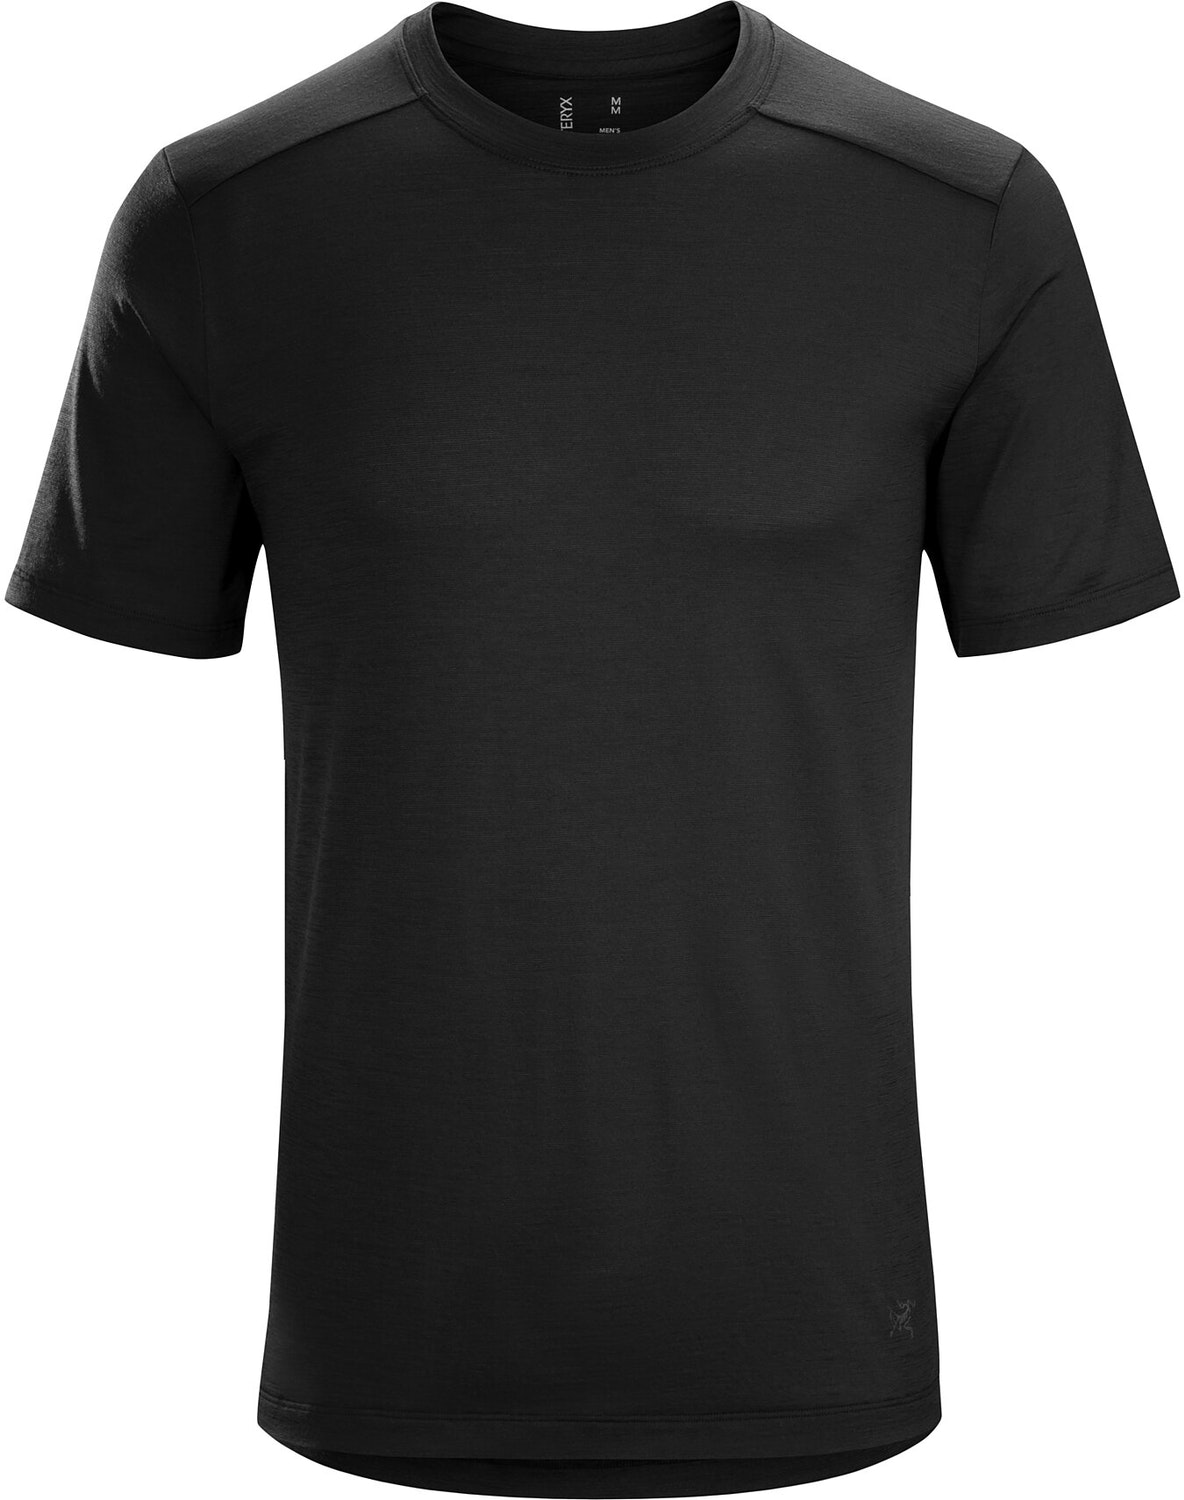 T-shirt Arc'teryx A2B Uomo Nere - IT-3345713